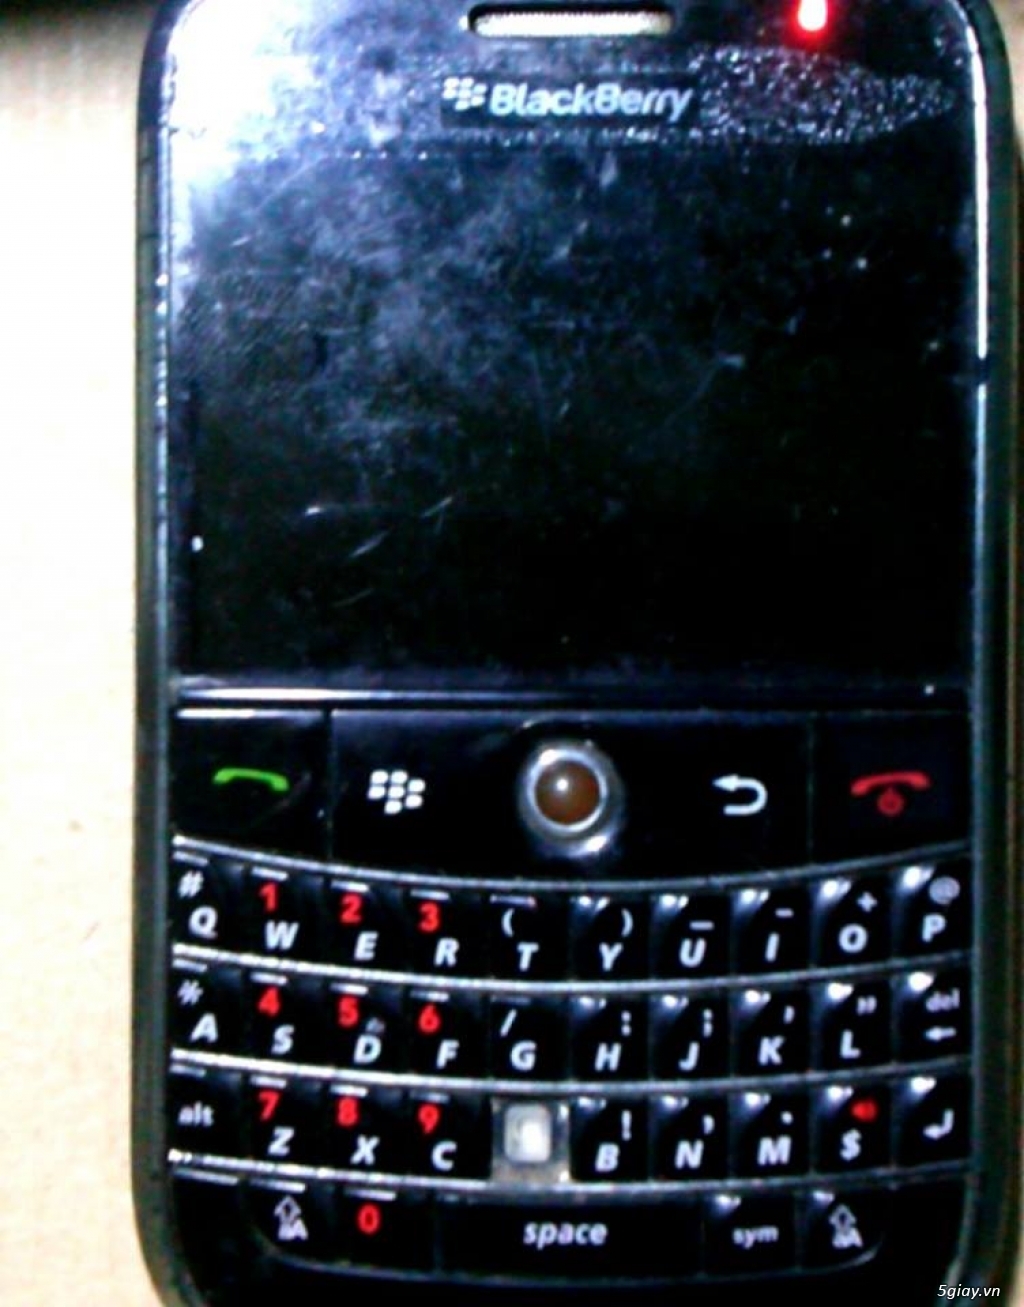 blackberry 6710,7290,8100,8300 lỗi nhẹ giá xác - 16